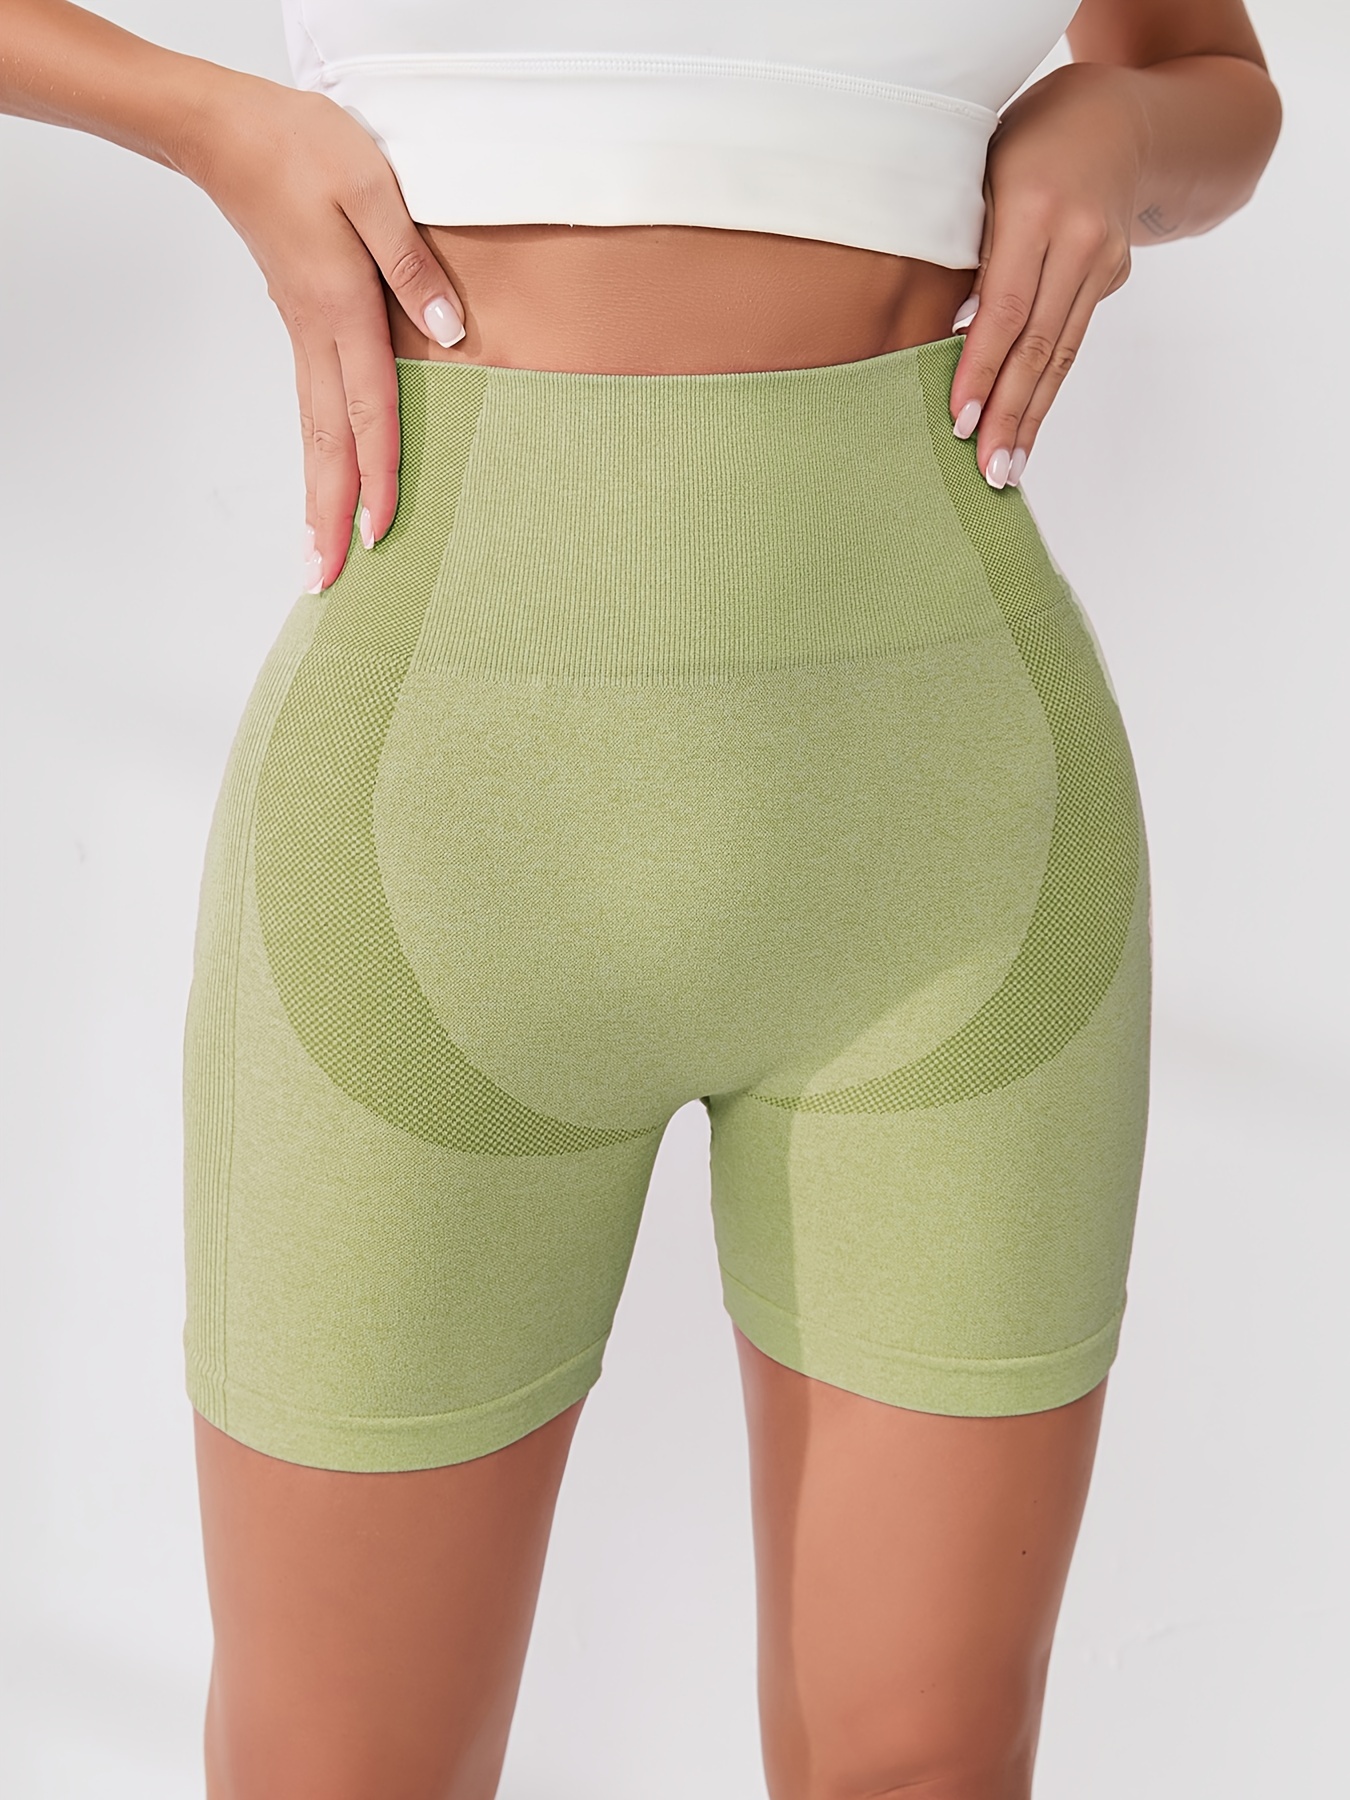 GIPPRO HeyNuts Women's High Waist Yoga Pants Tummy Control Butt